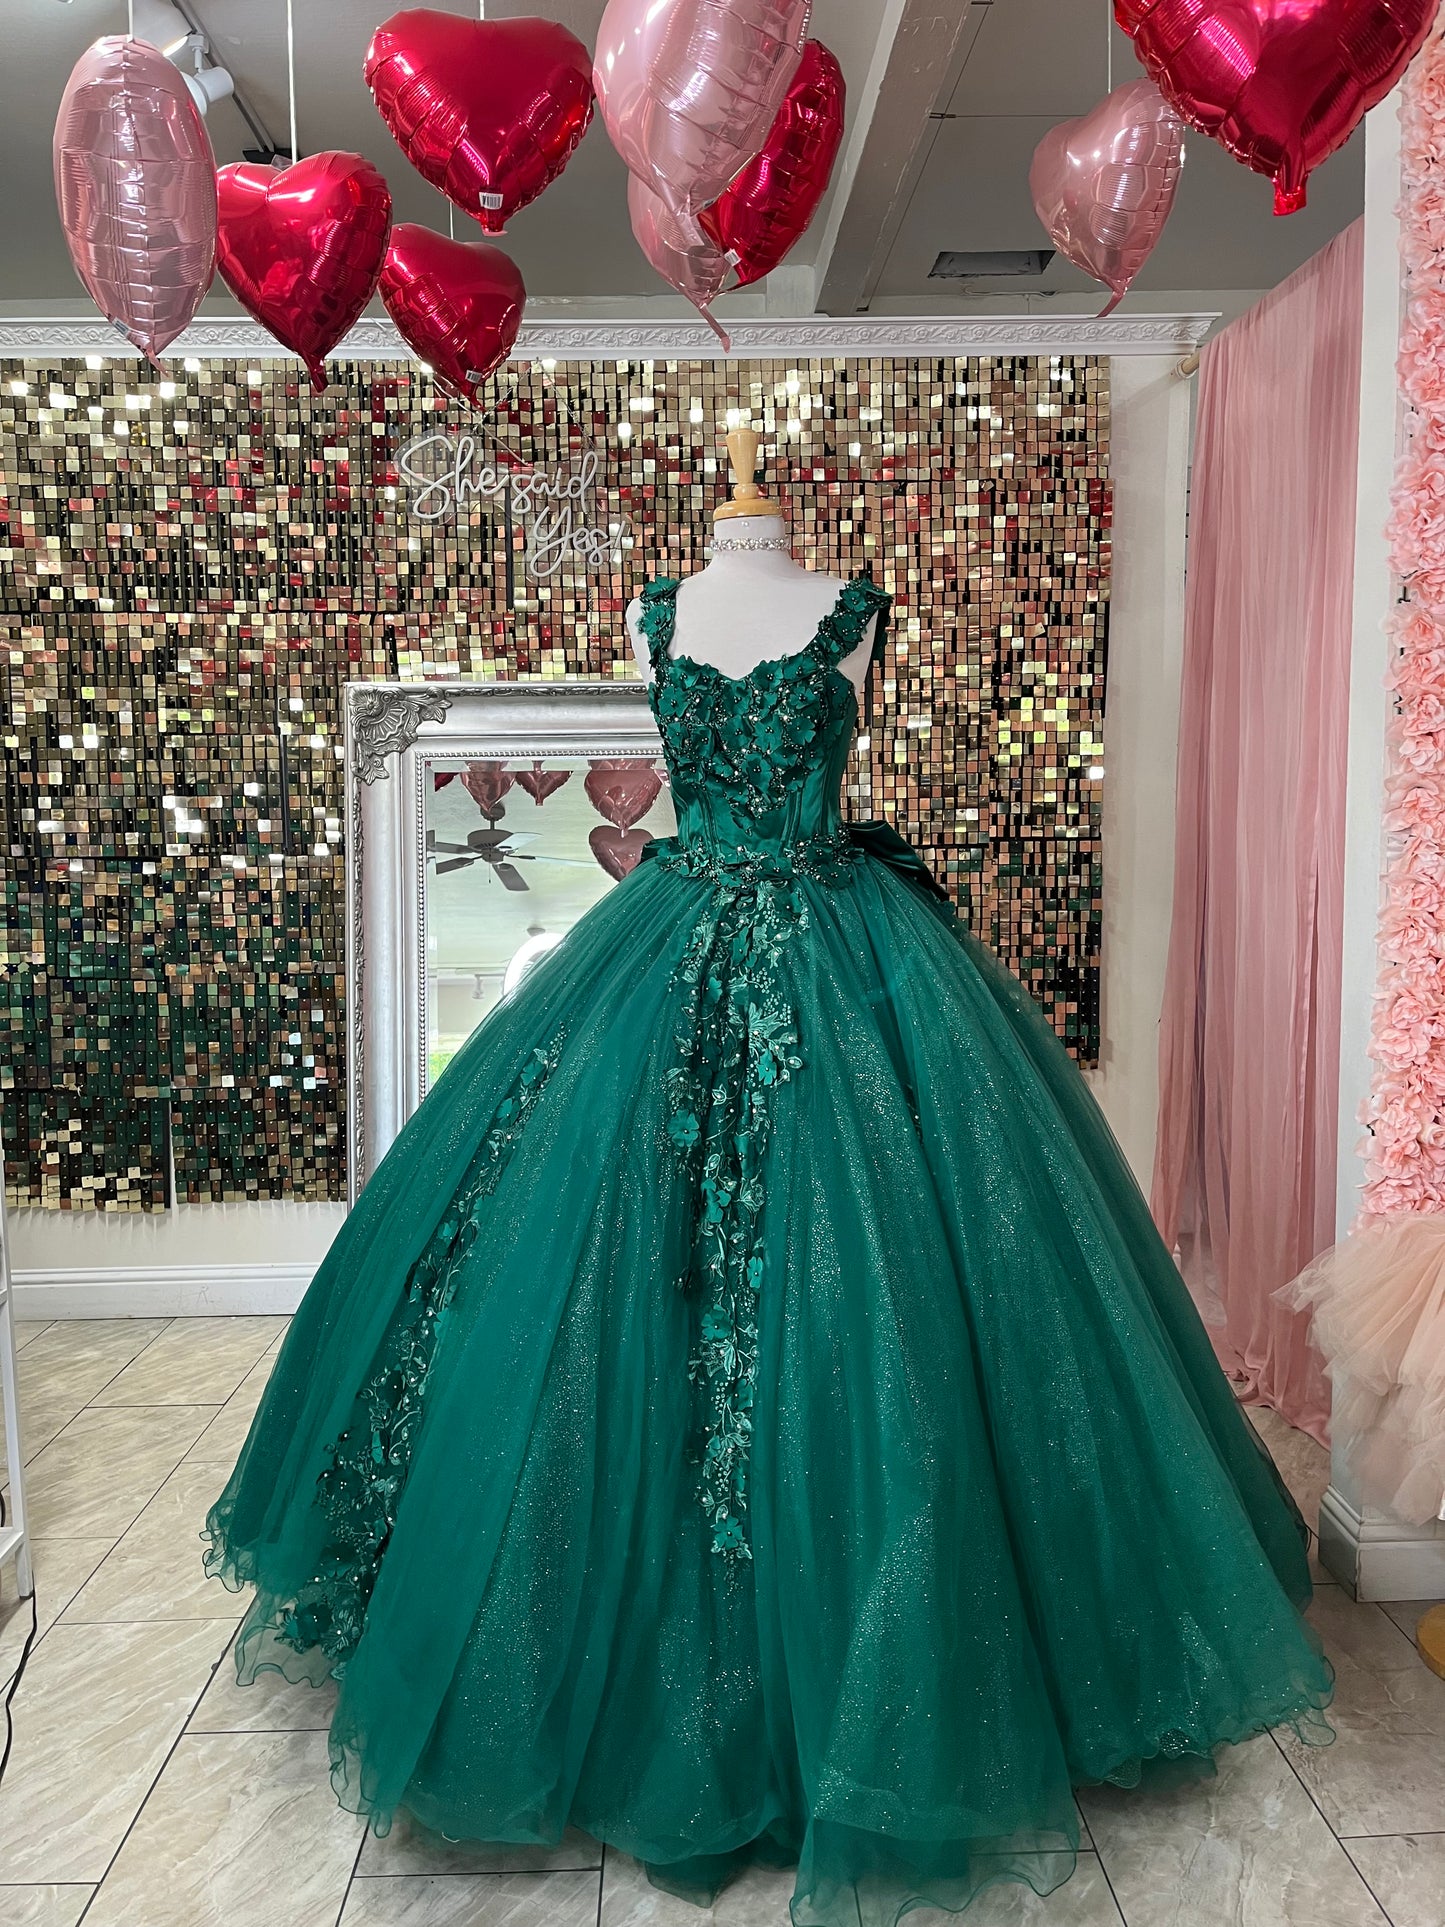 Enchanted Green Dress